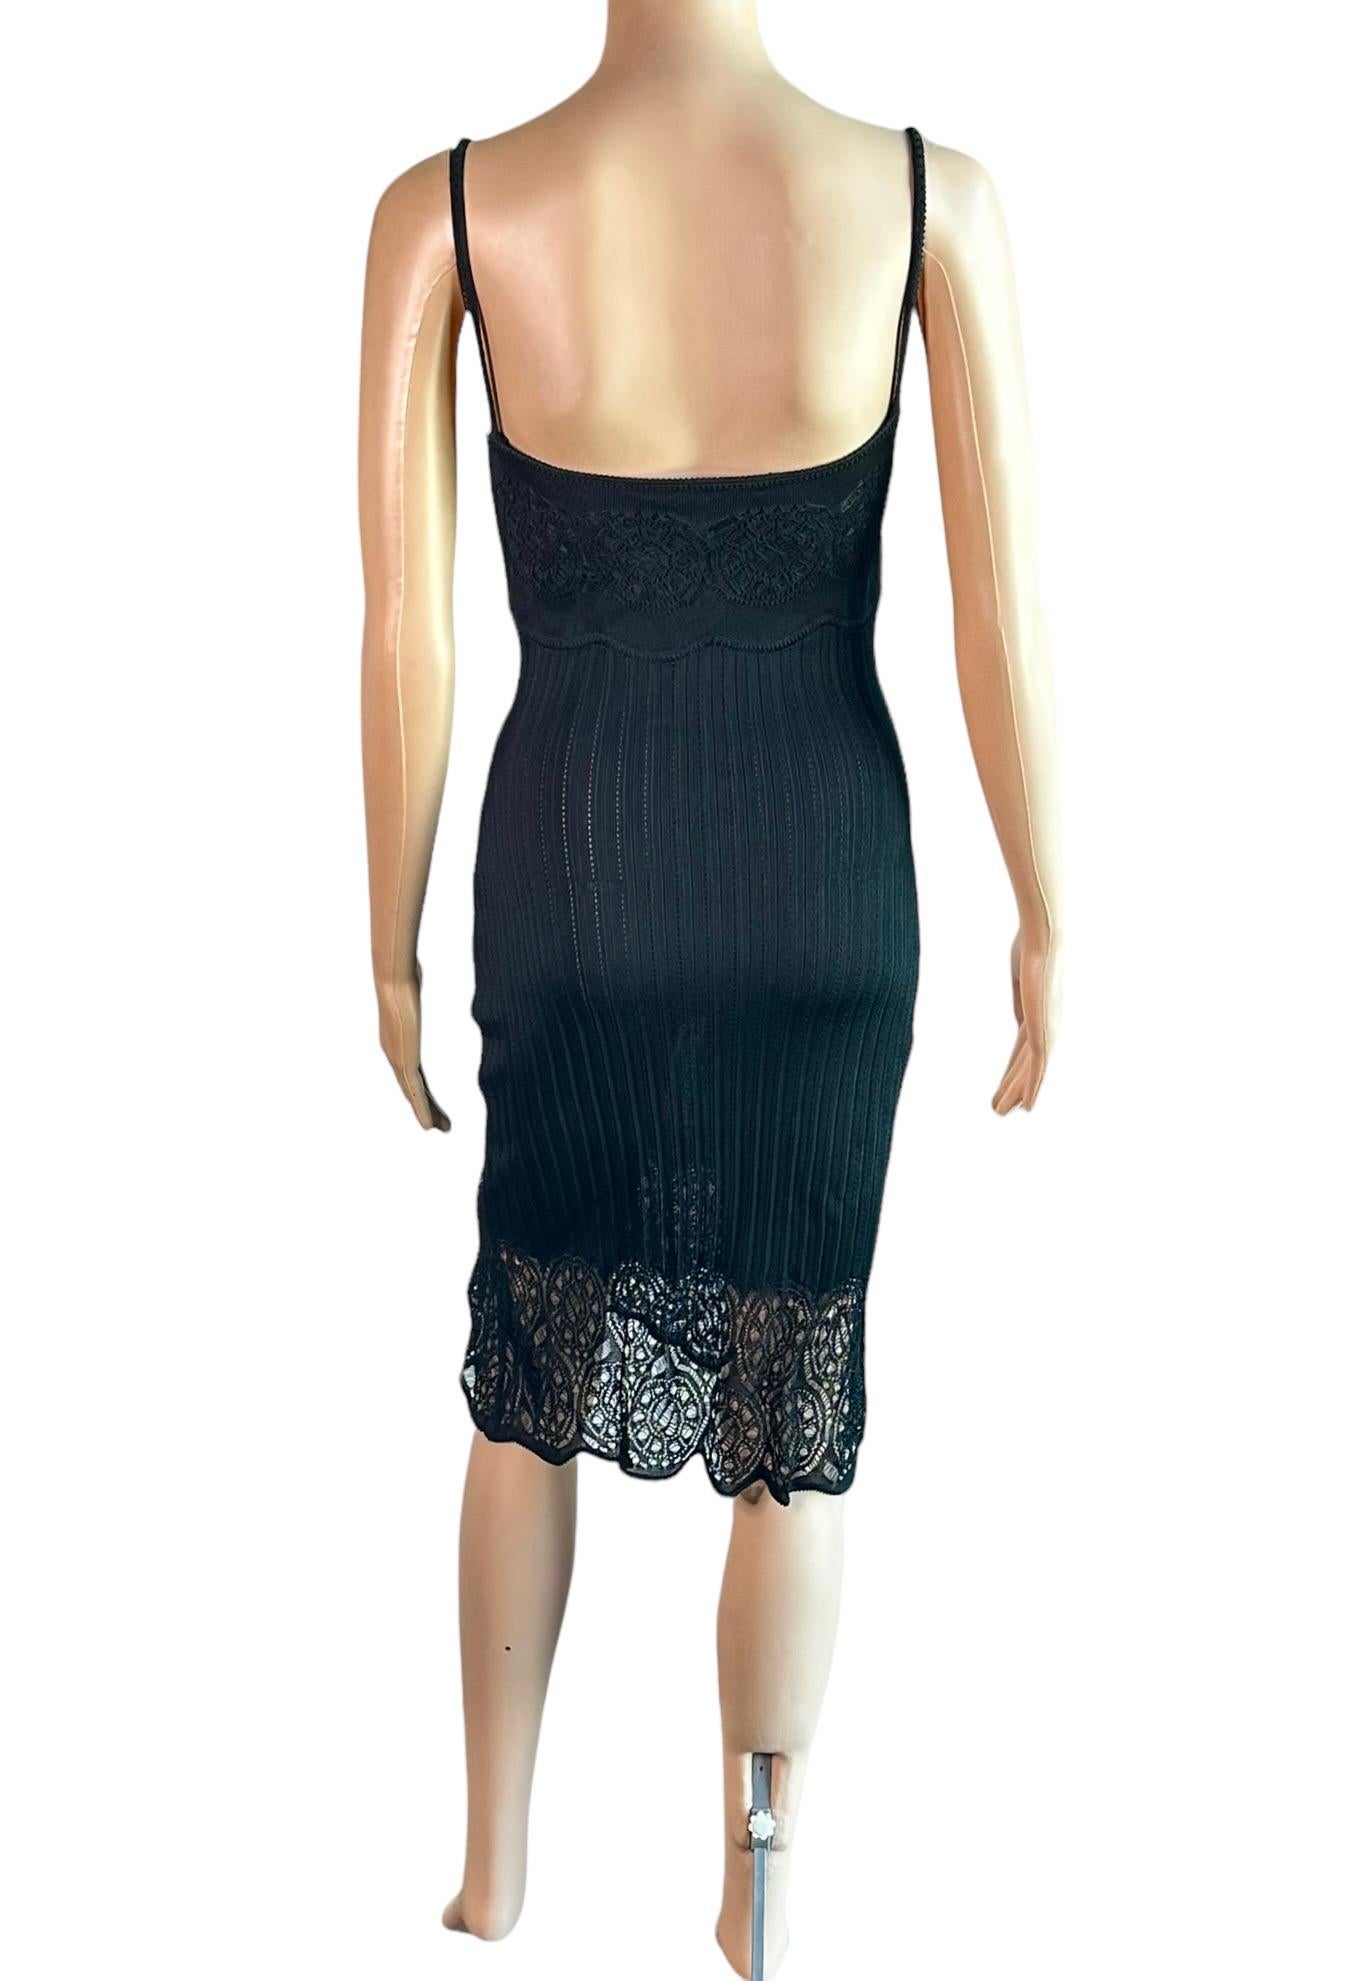 John Galliano S/S 1999 - Mini robe noire en dentelle transparente ouverte en vente 3